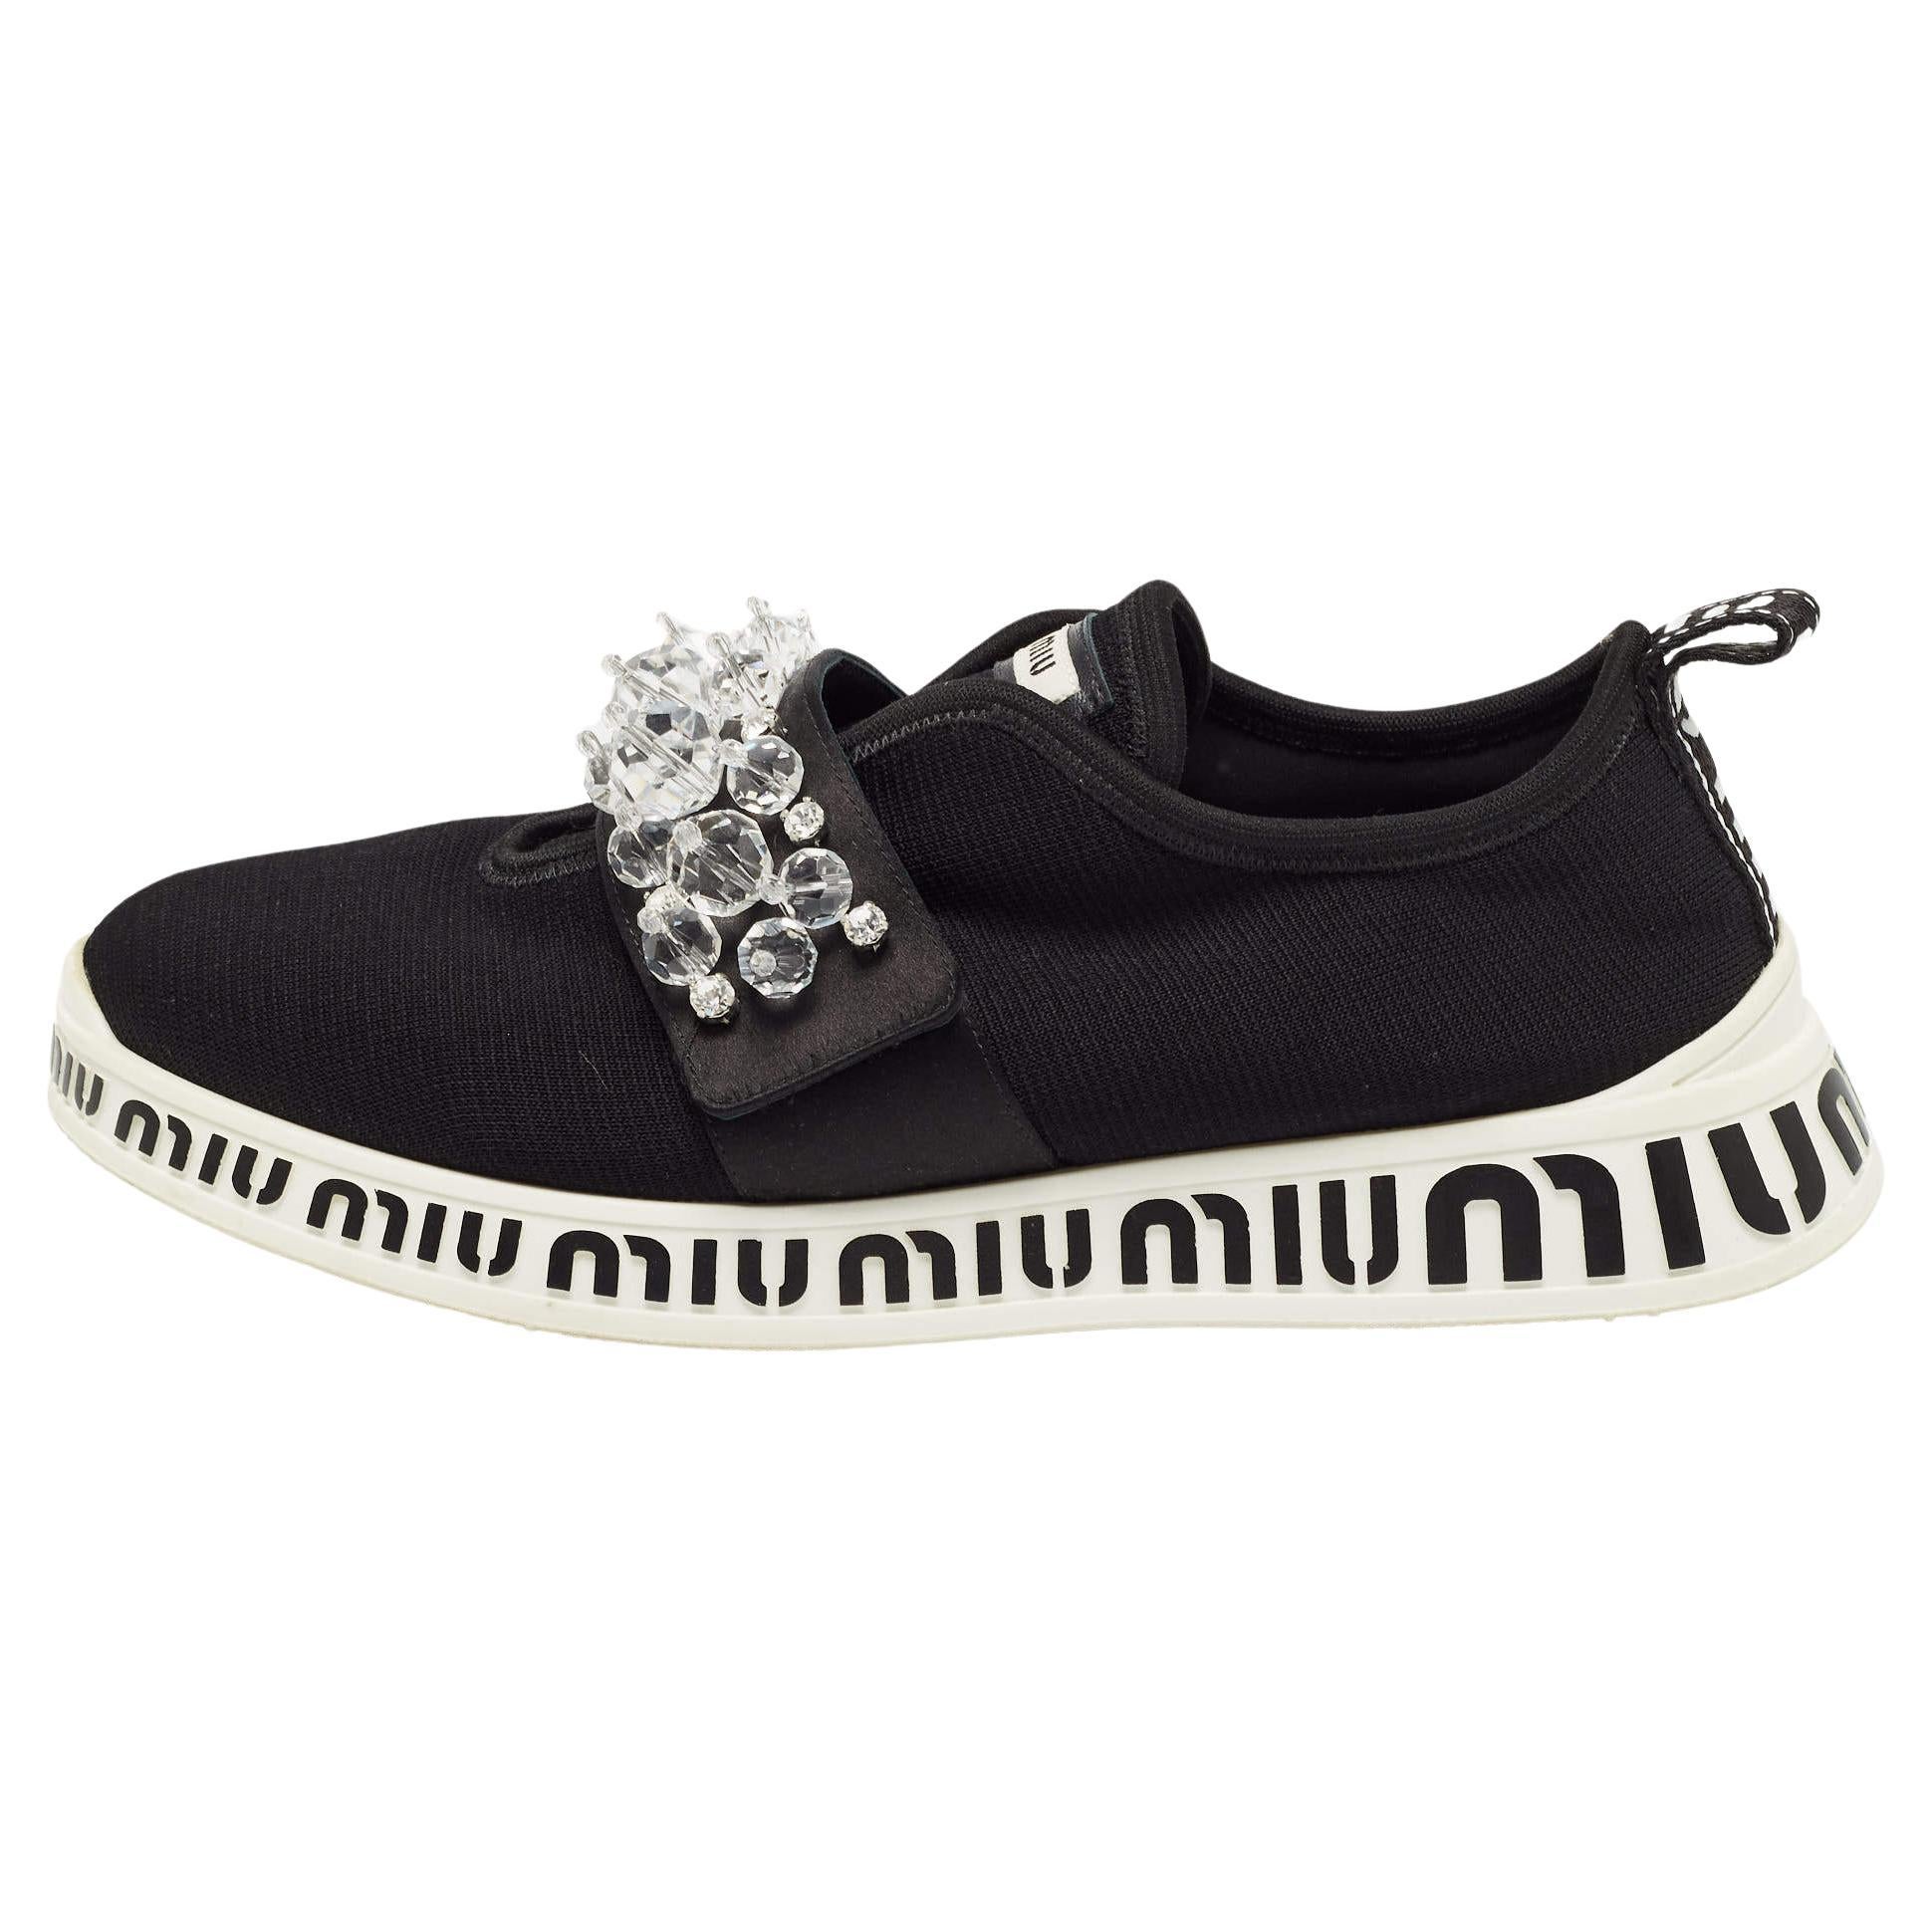 Miu Miu Black Fabric and Satin Crystal Embellished Slip On Sneakers Size 38.5